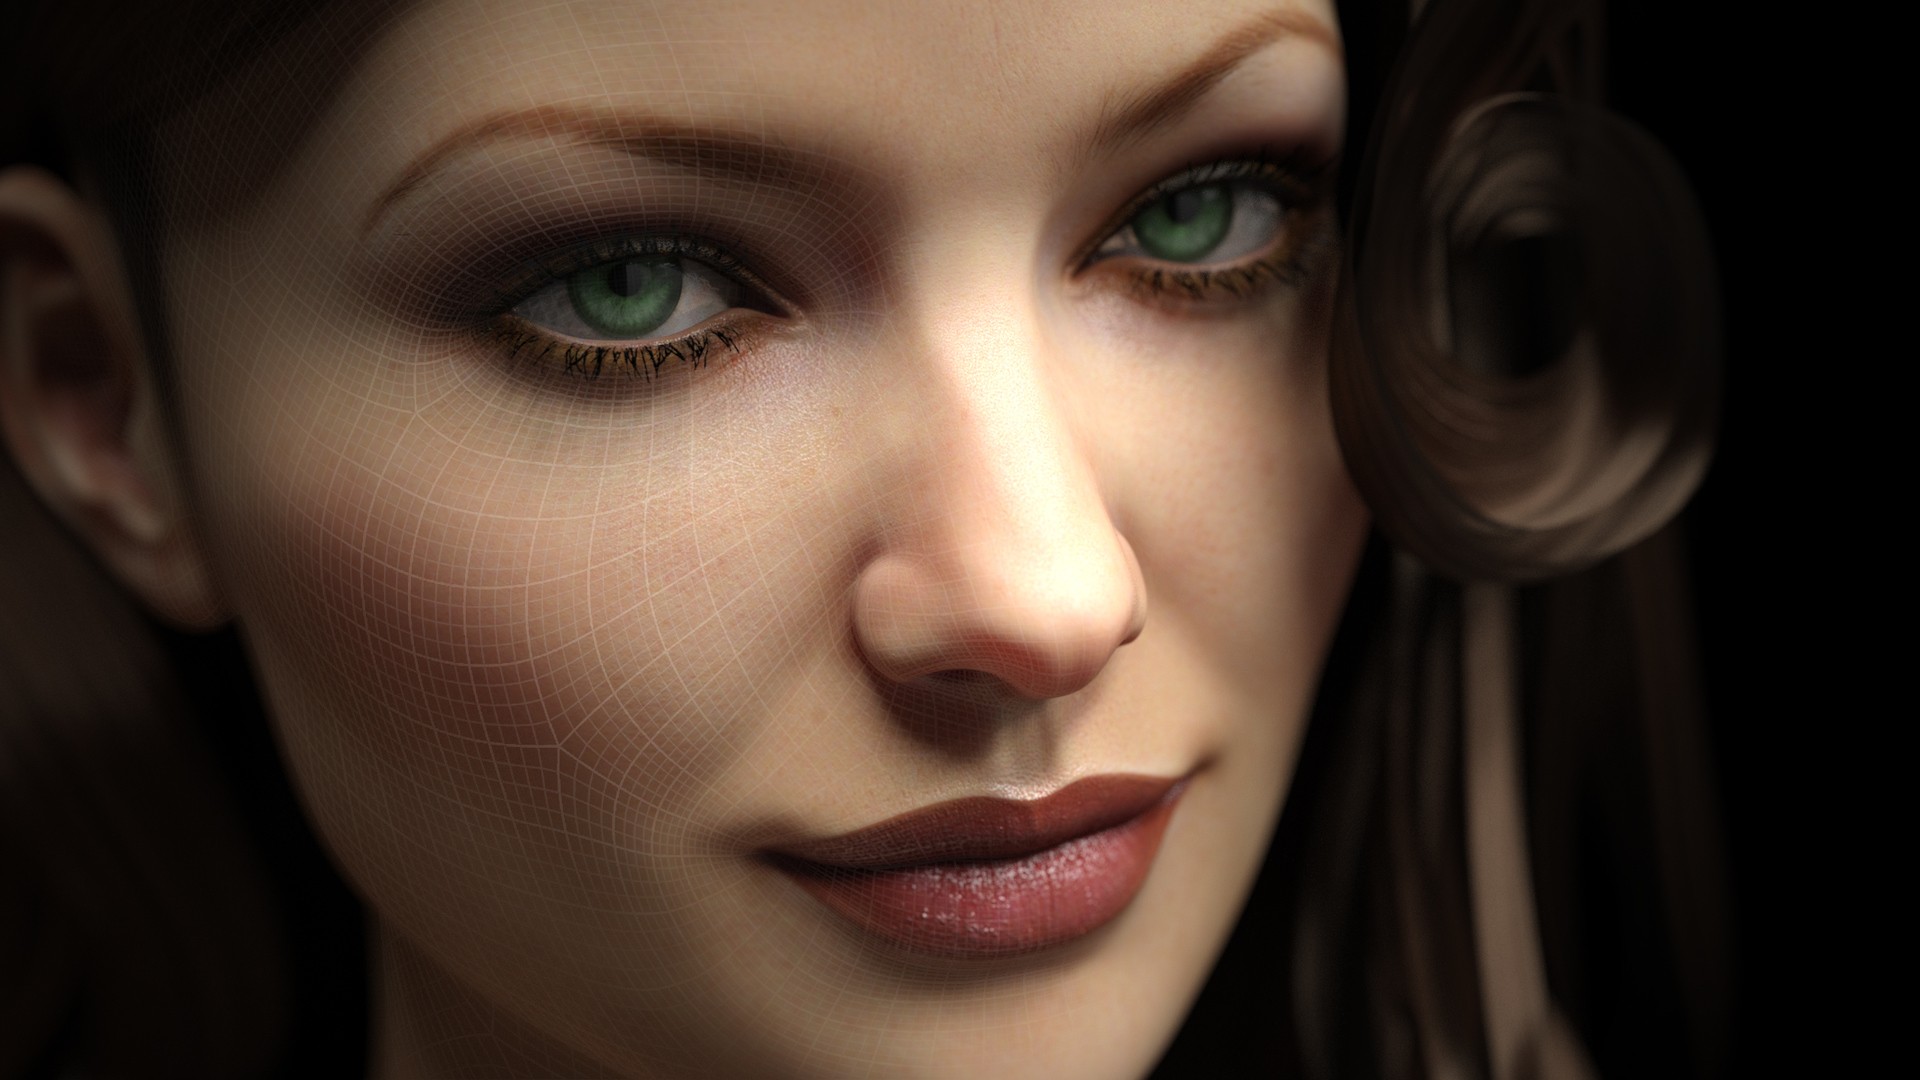 General 1920x1080 women digital art portrait face CGI looking at viewer green eyes black background nets square closeup red lipstick DeviantArt